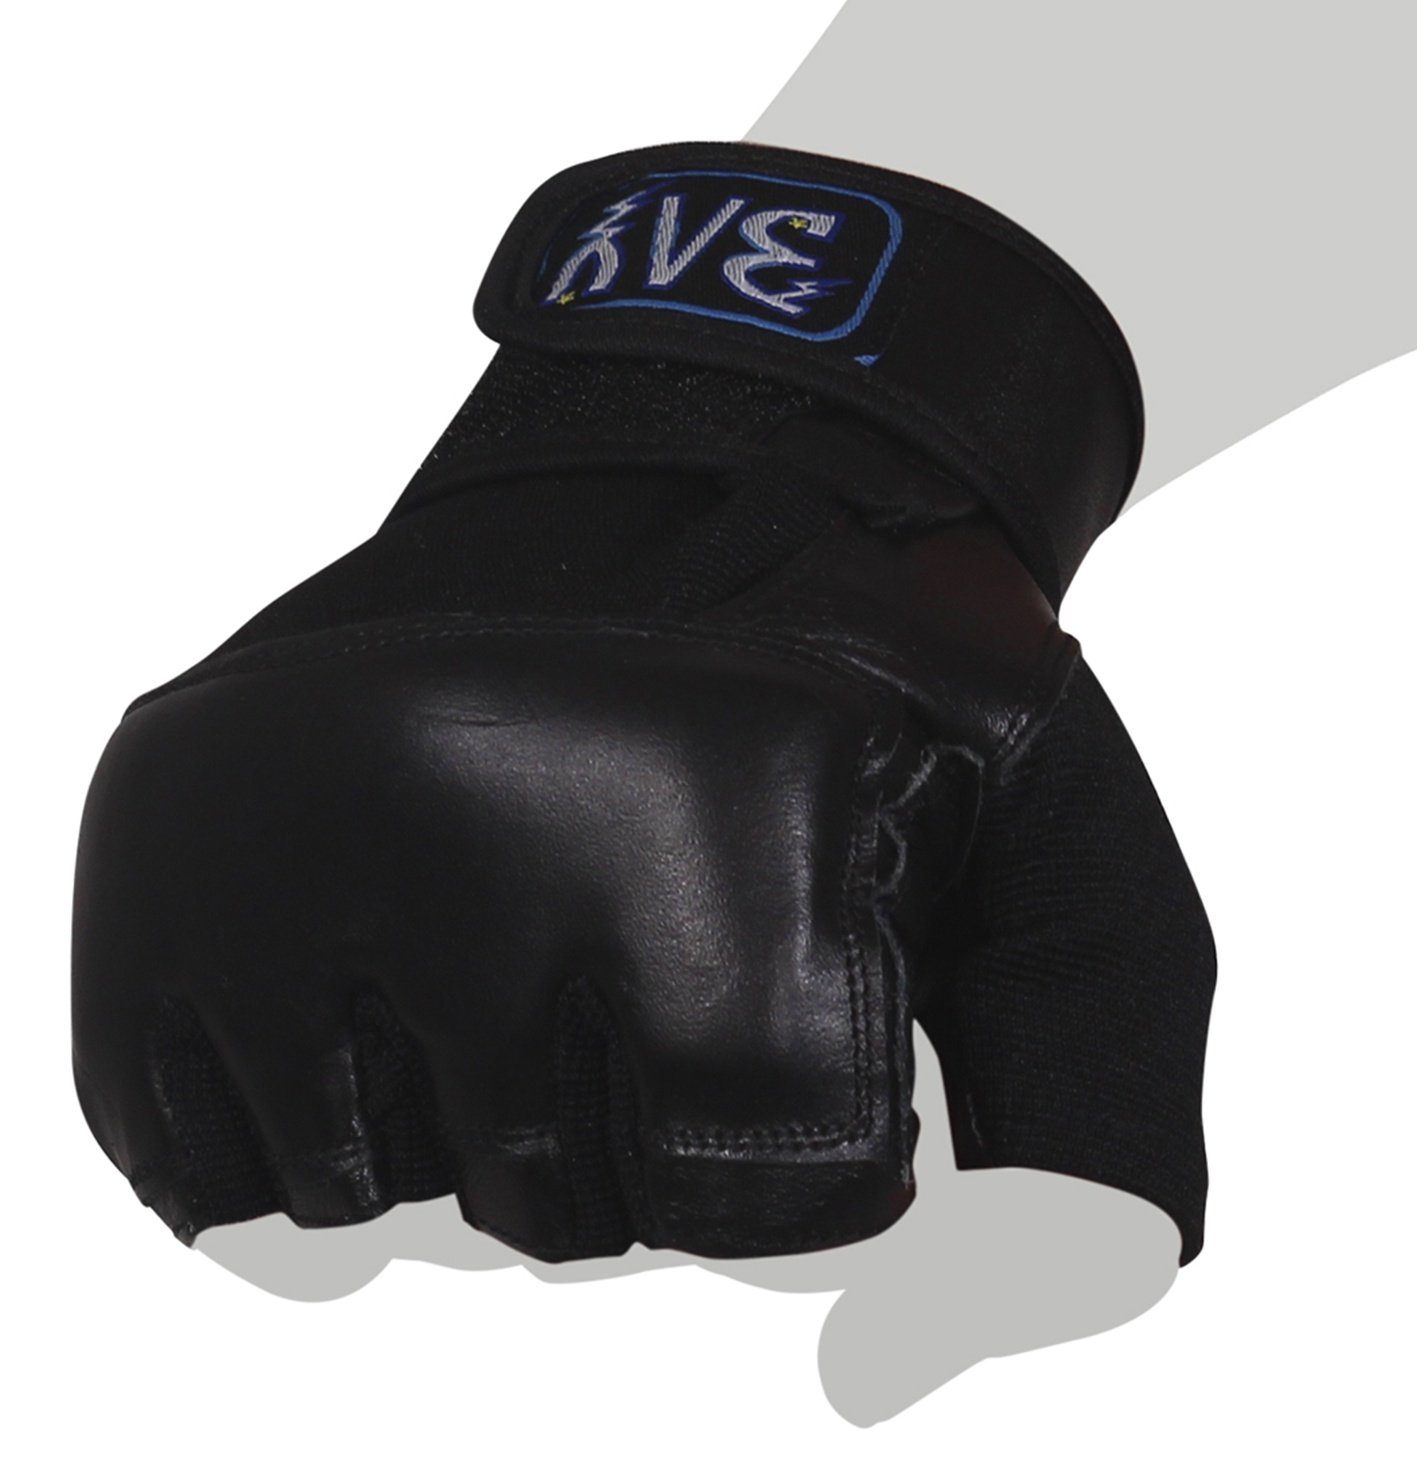 BAY-Sports Sandsackhandschuhe Orbit Boxhandschuhe schwarz, Handschutz - S XL Sandsack Boxsack sehr robust, Leder